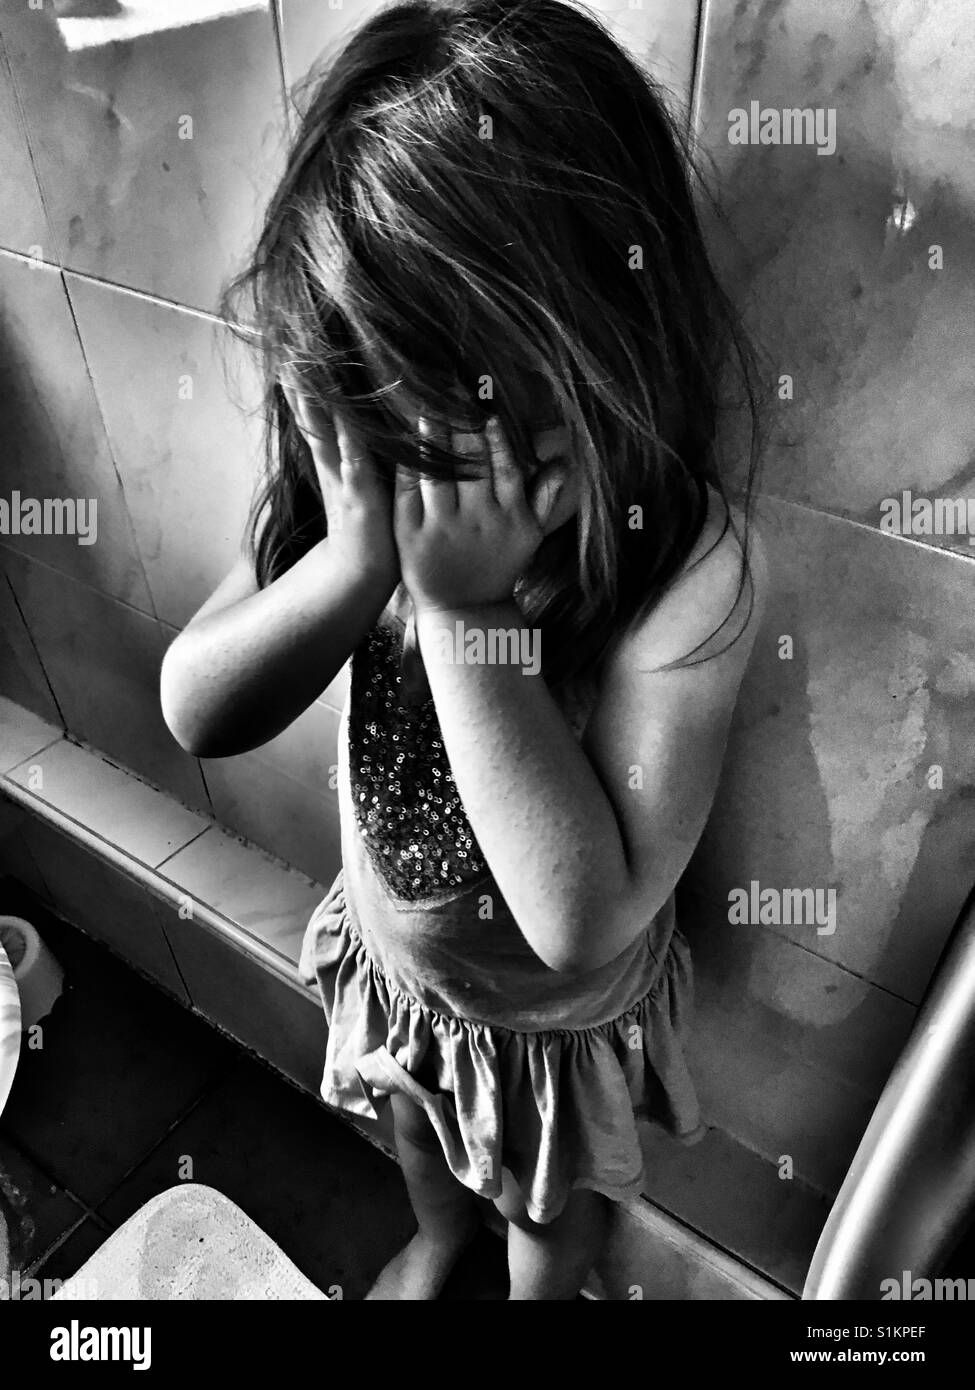 Crying girl in bathroom. Stock Photo